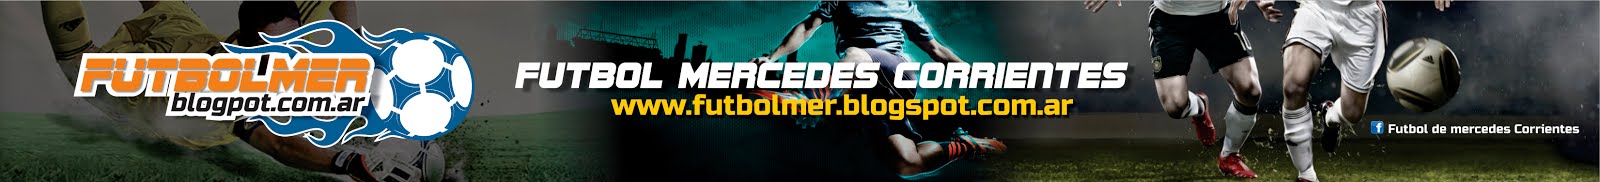 Fútbol de Mercedes Corrientes